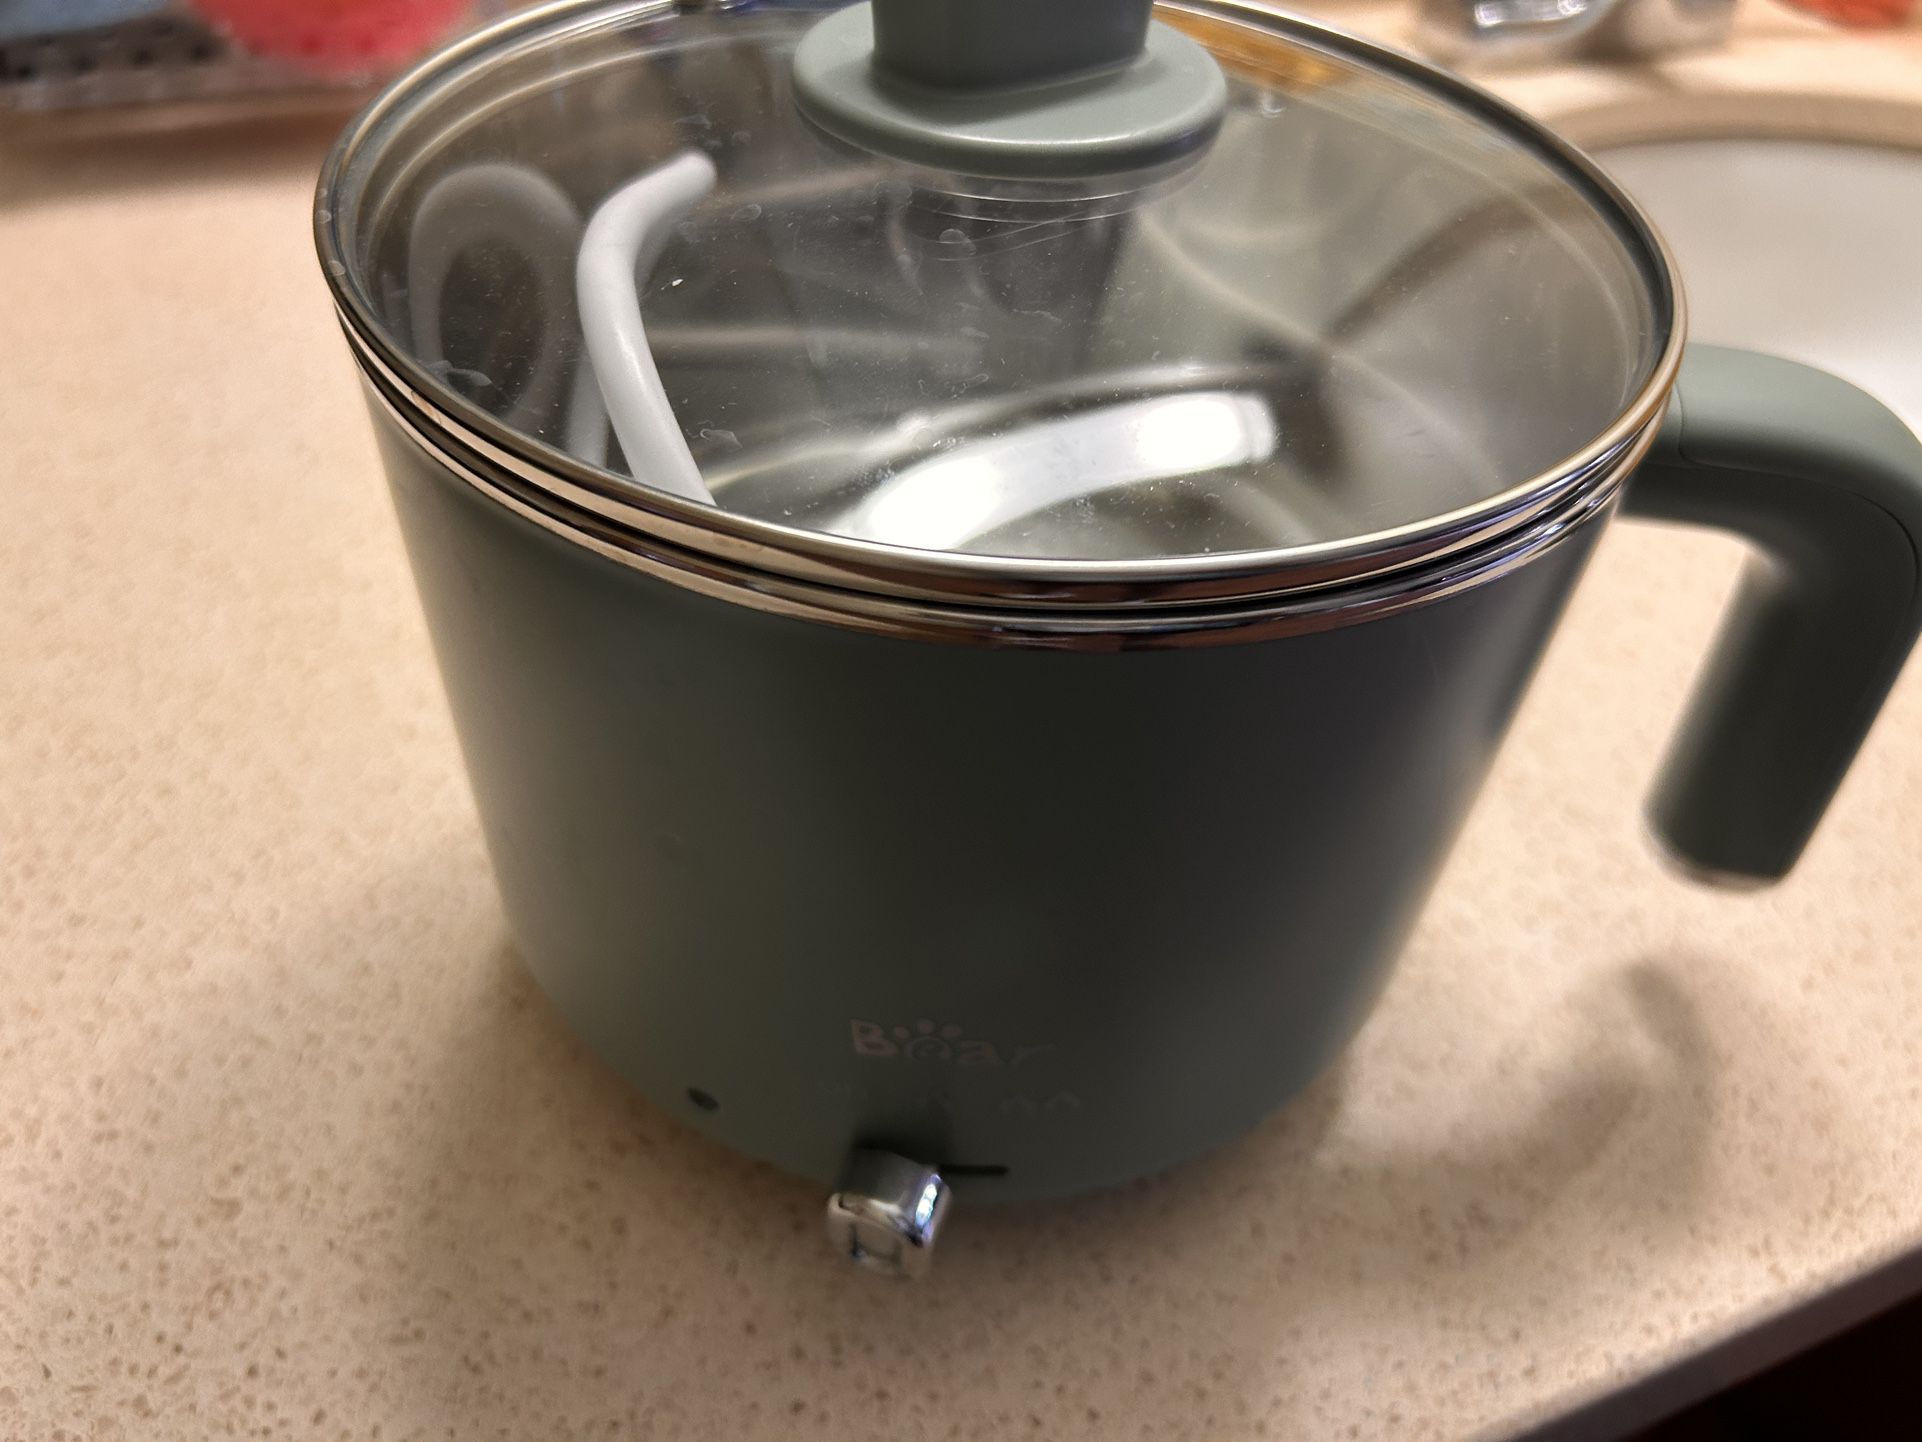 Mini Electric pot